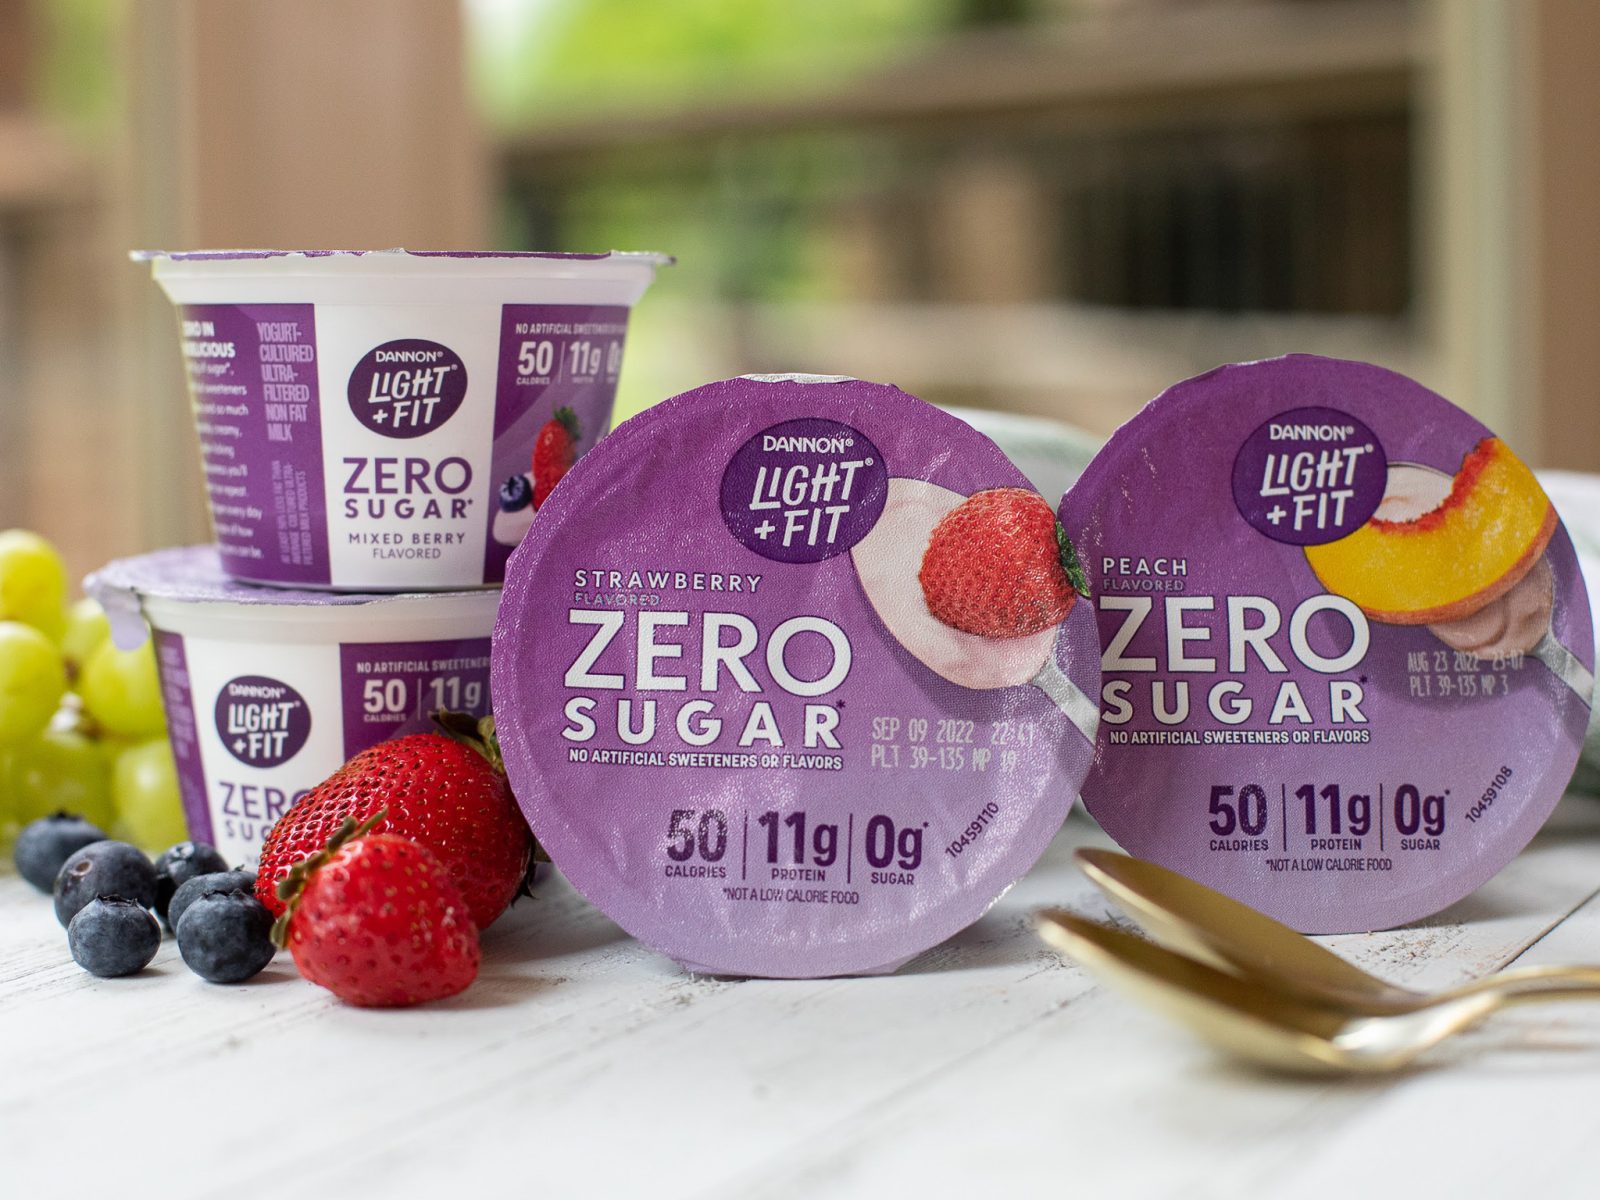 Big Savings On Delicious Dannon Light + Fit Zero Sugar Yogurt – Just $1 Per Cup At Publix